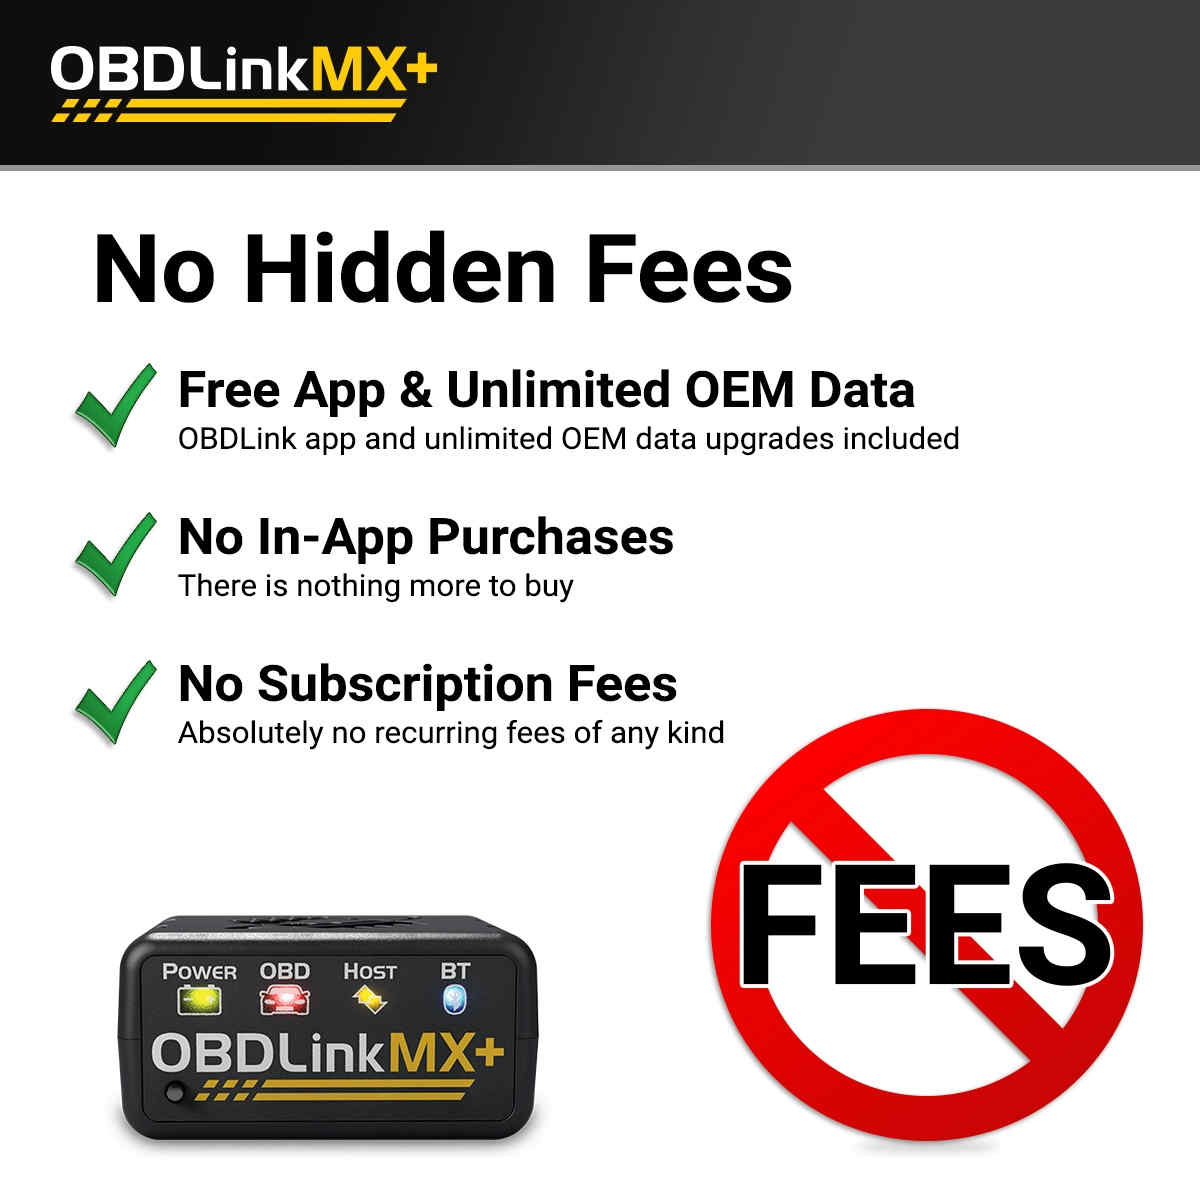 OBDLink MX+